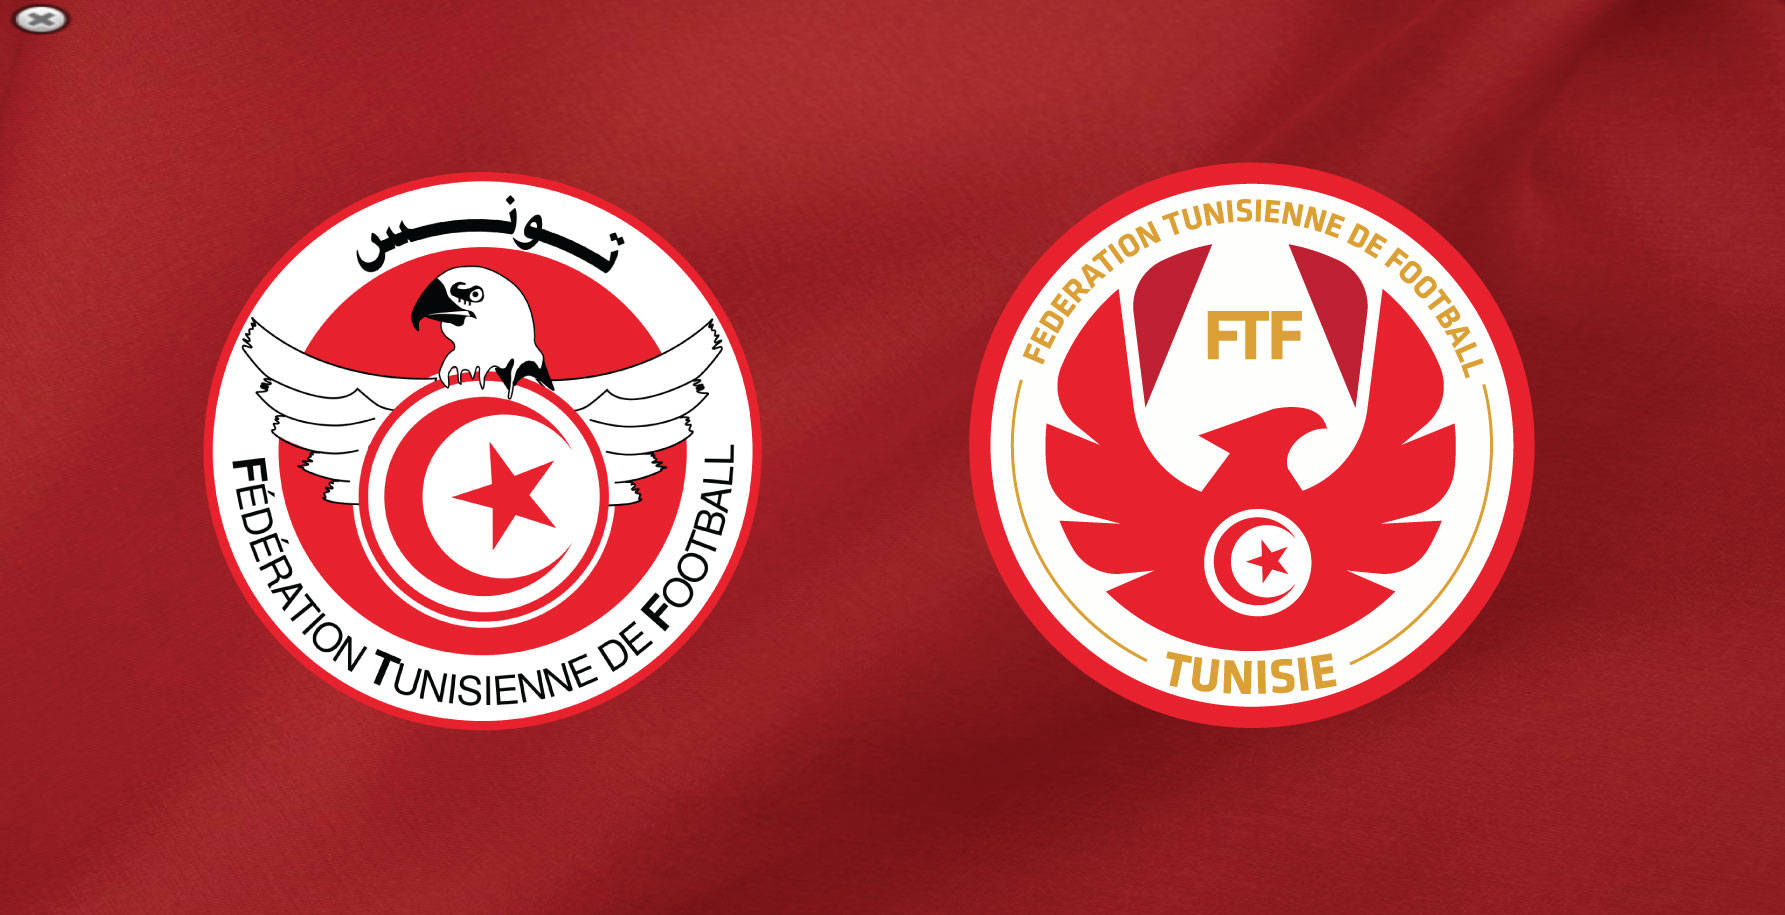 Tunisia National Football Team Logos Wallpaper